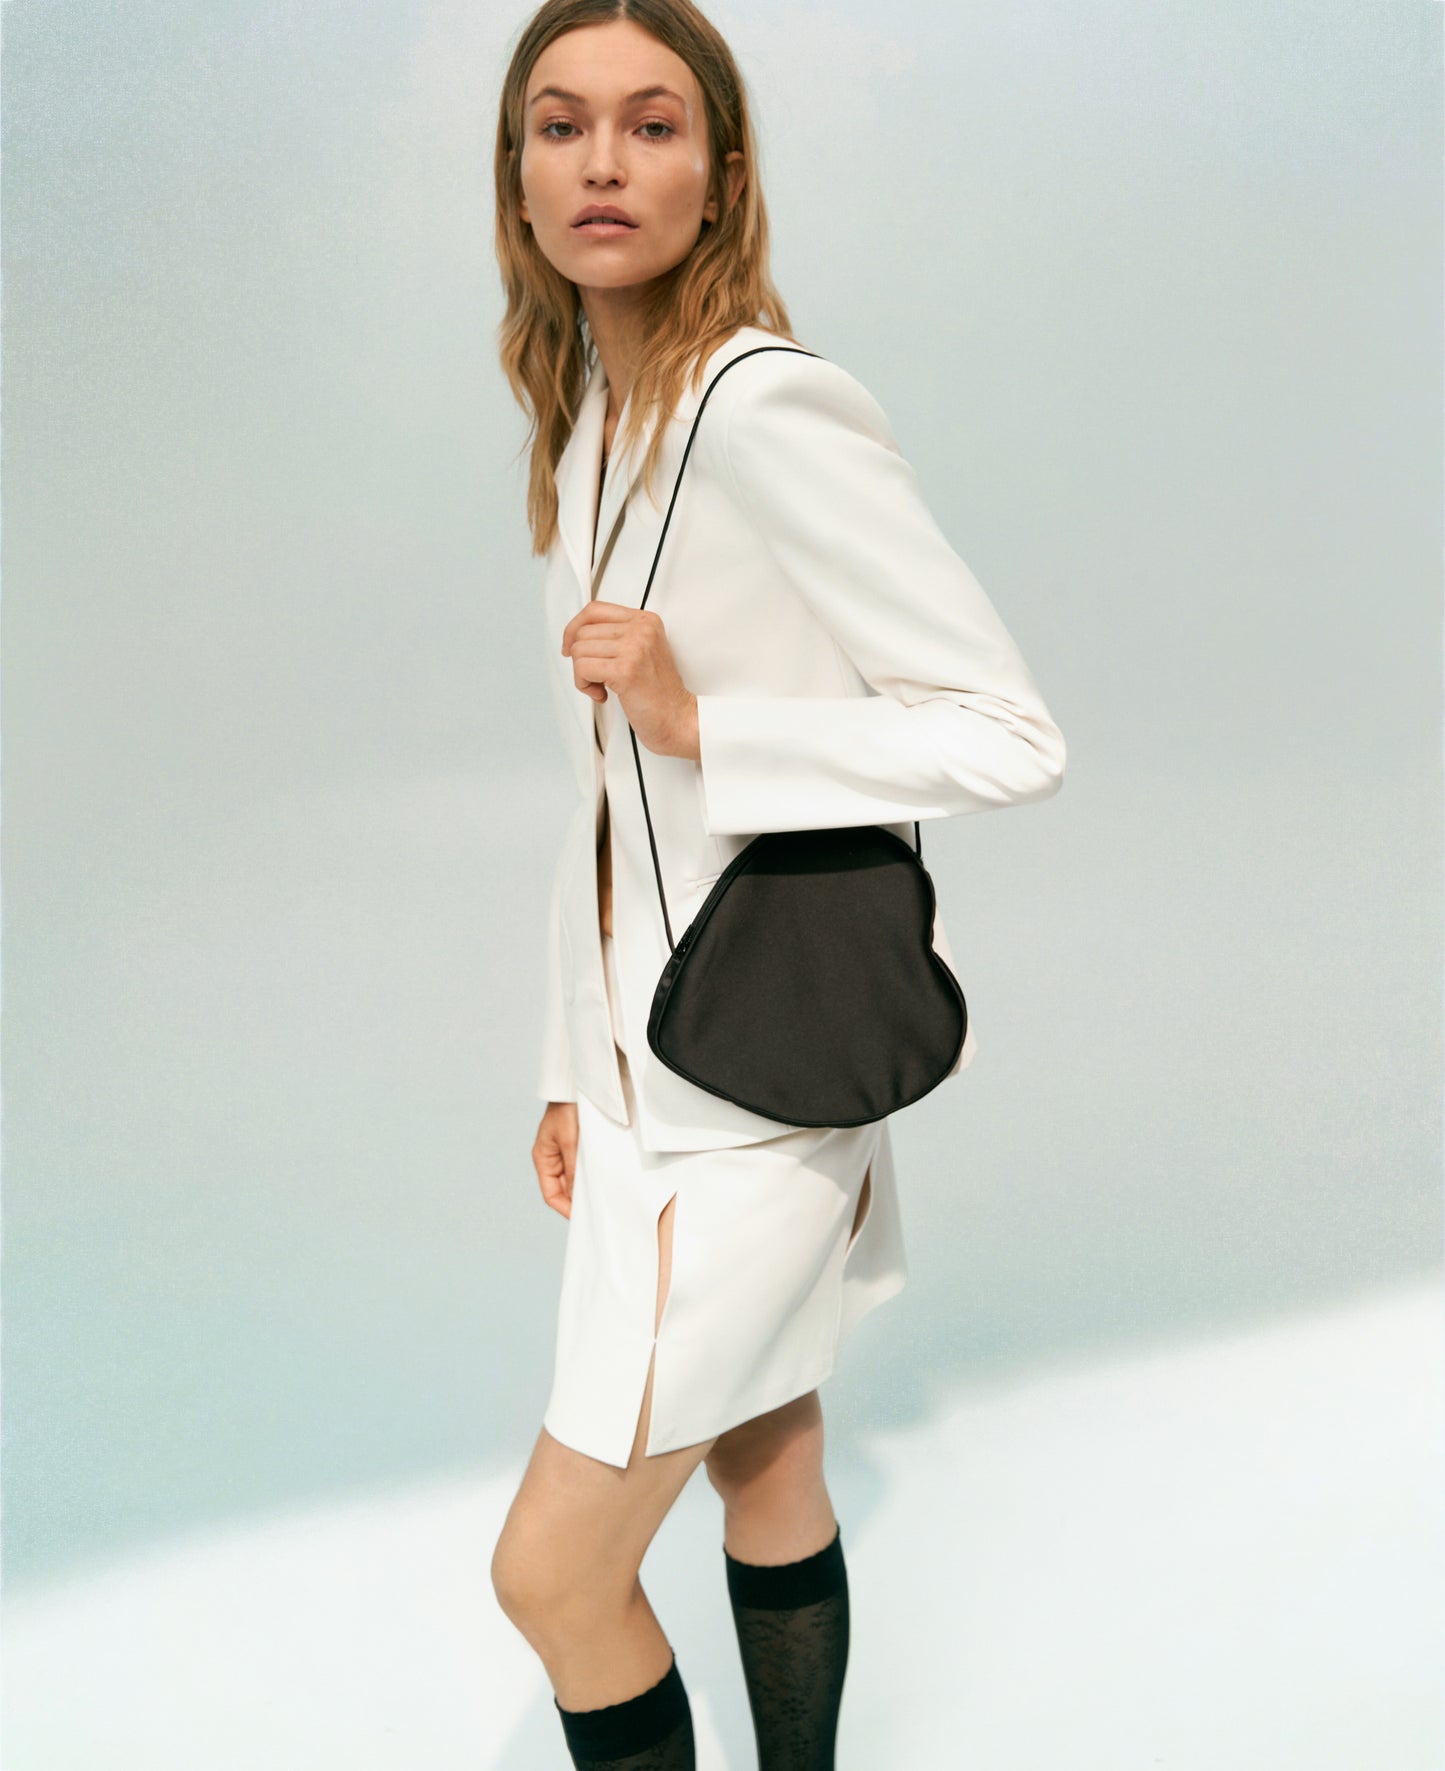 Leather Cut-out Panels Skirt in white color from forma brand. Shop online, leather white skirt. Спідниця з розрізами, біла шкіряна спідниця тренд 2023, бренд ФОРМА